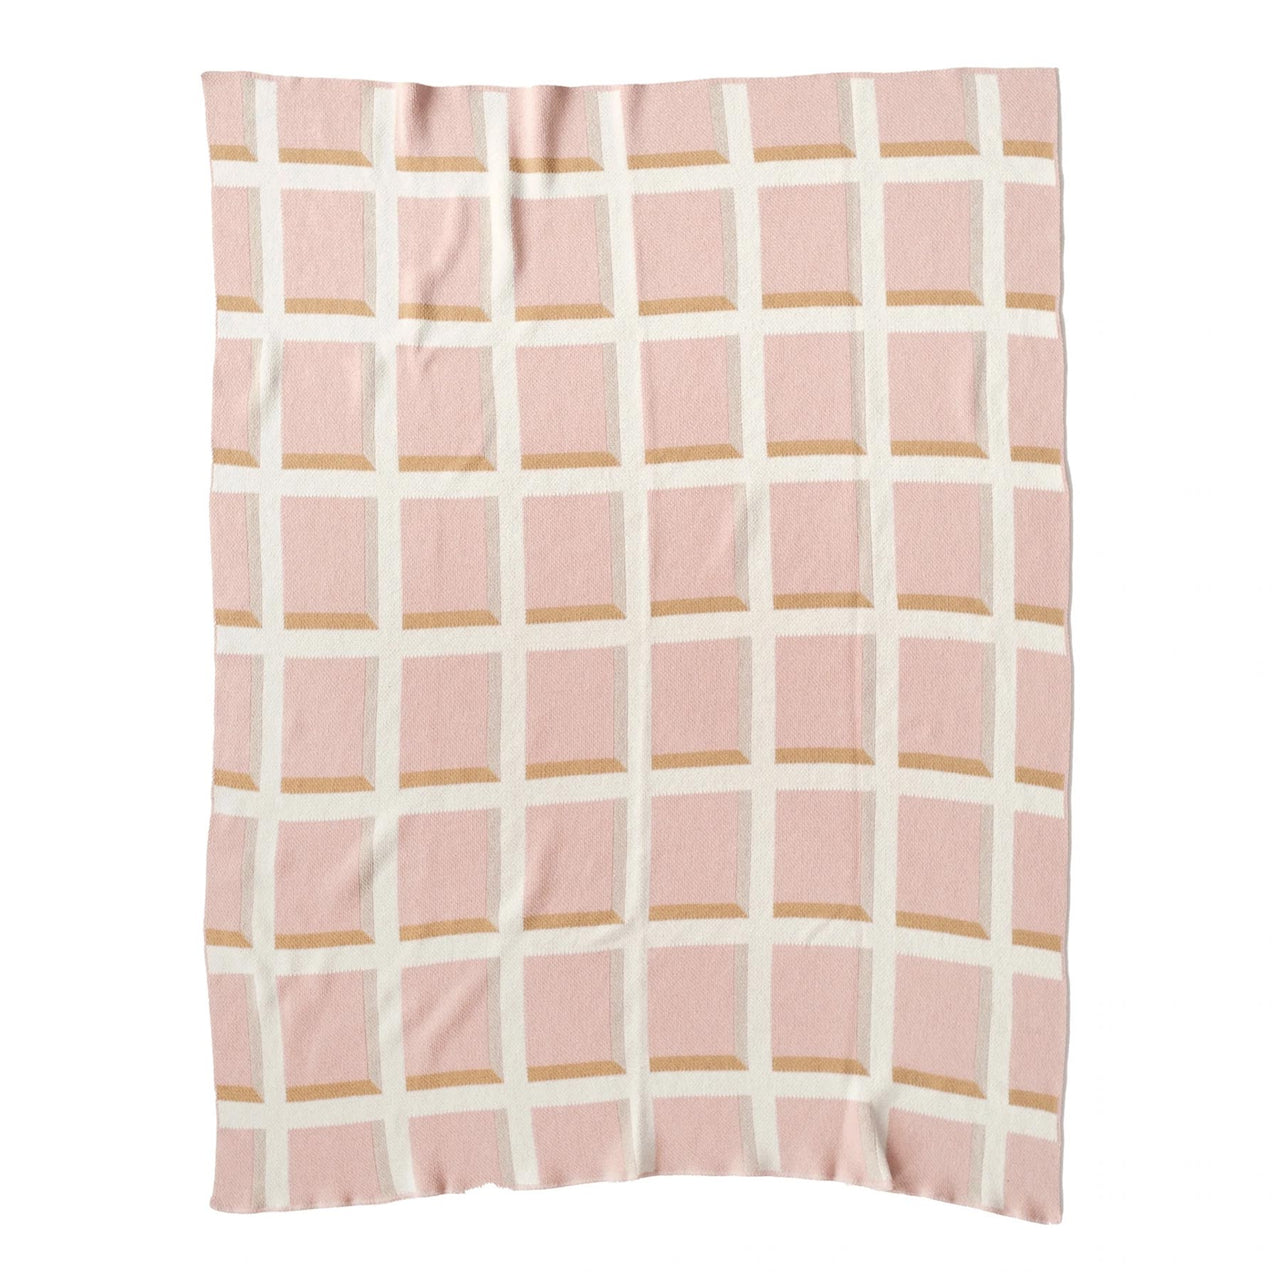 Windowpane Knit Throw Blanket in Blush